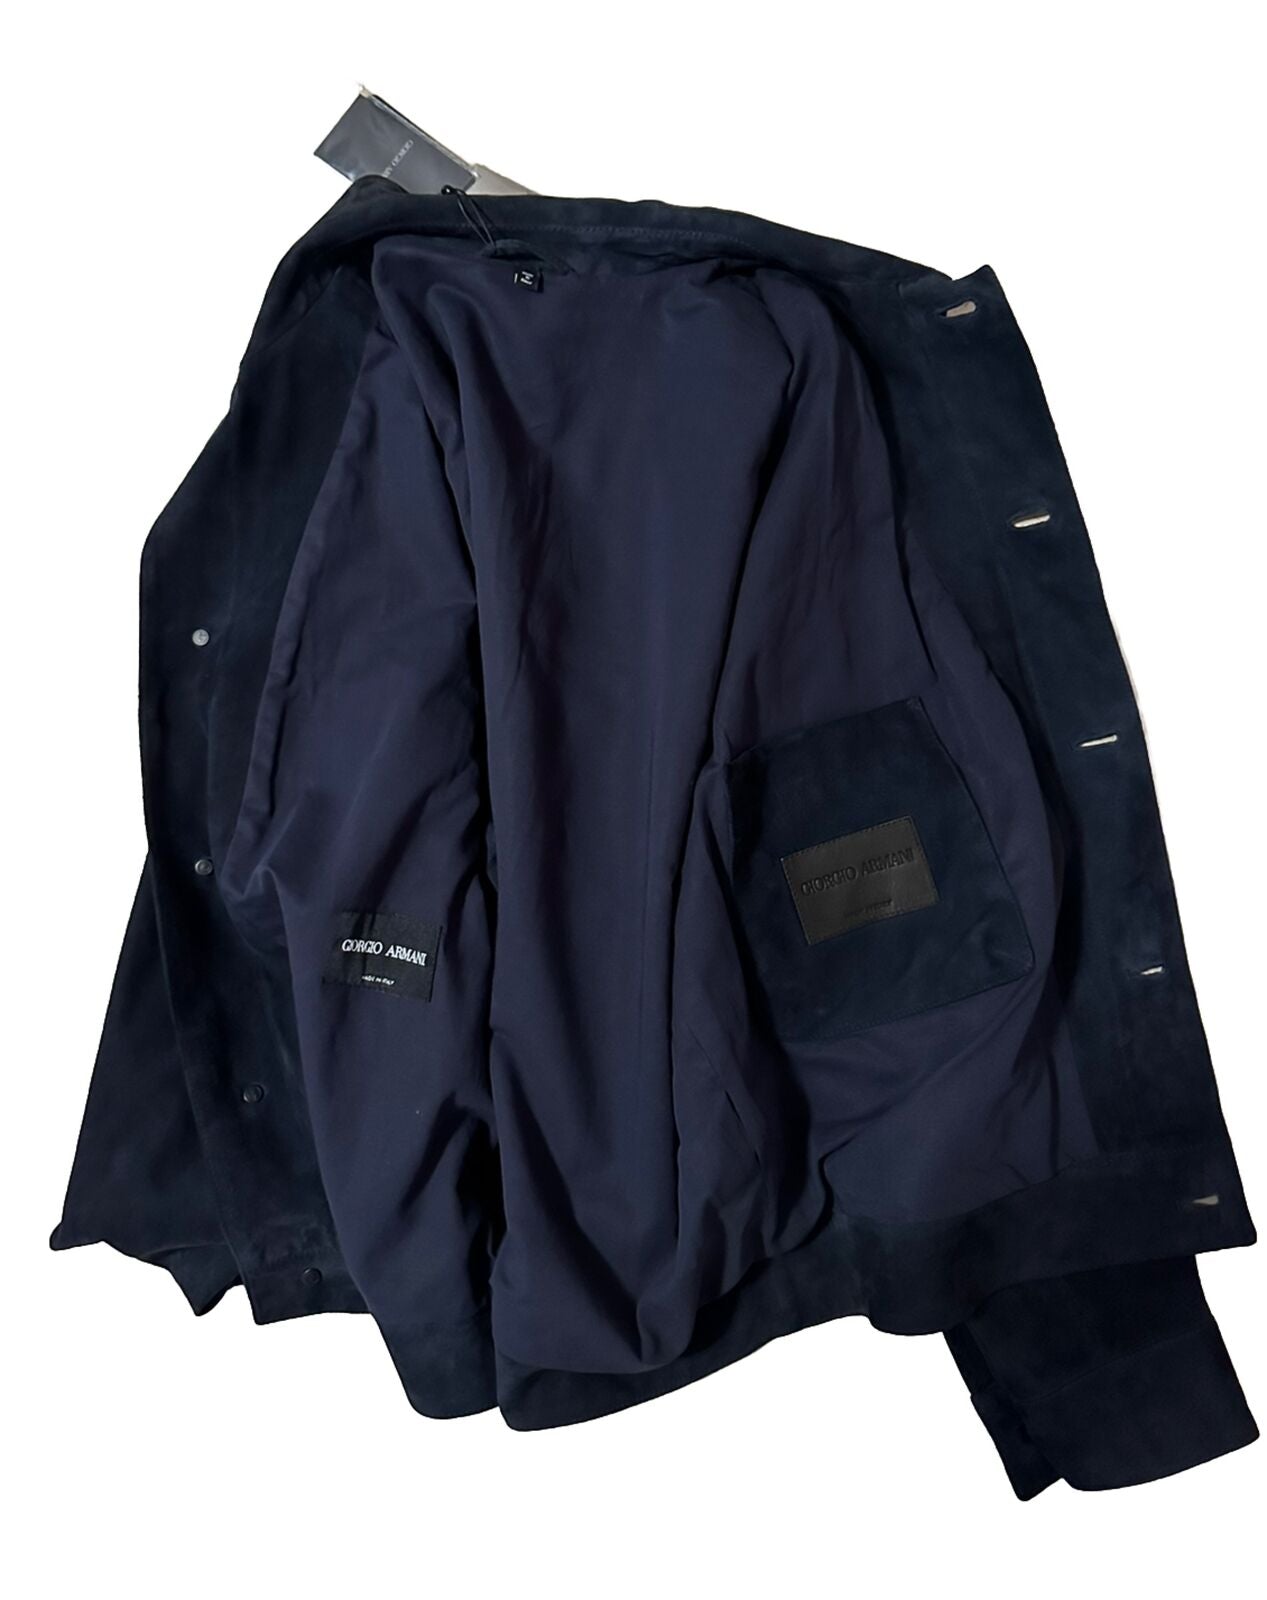 NWT $5800 Giorgio Armani Men’s Light Suede Jacket Blazer Navy 40 US/50 Eu Italy